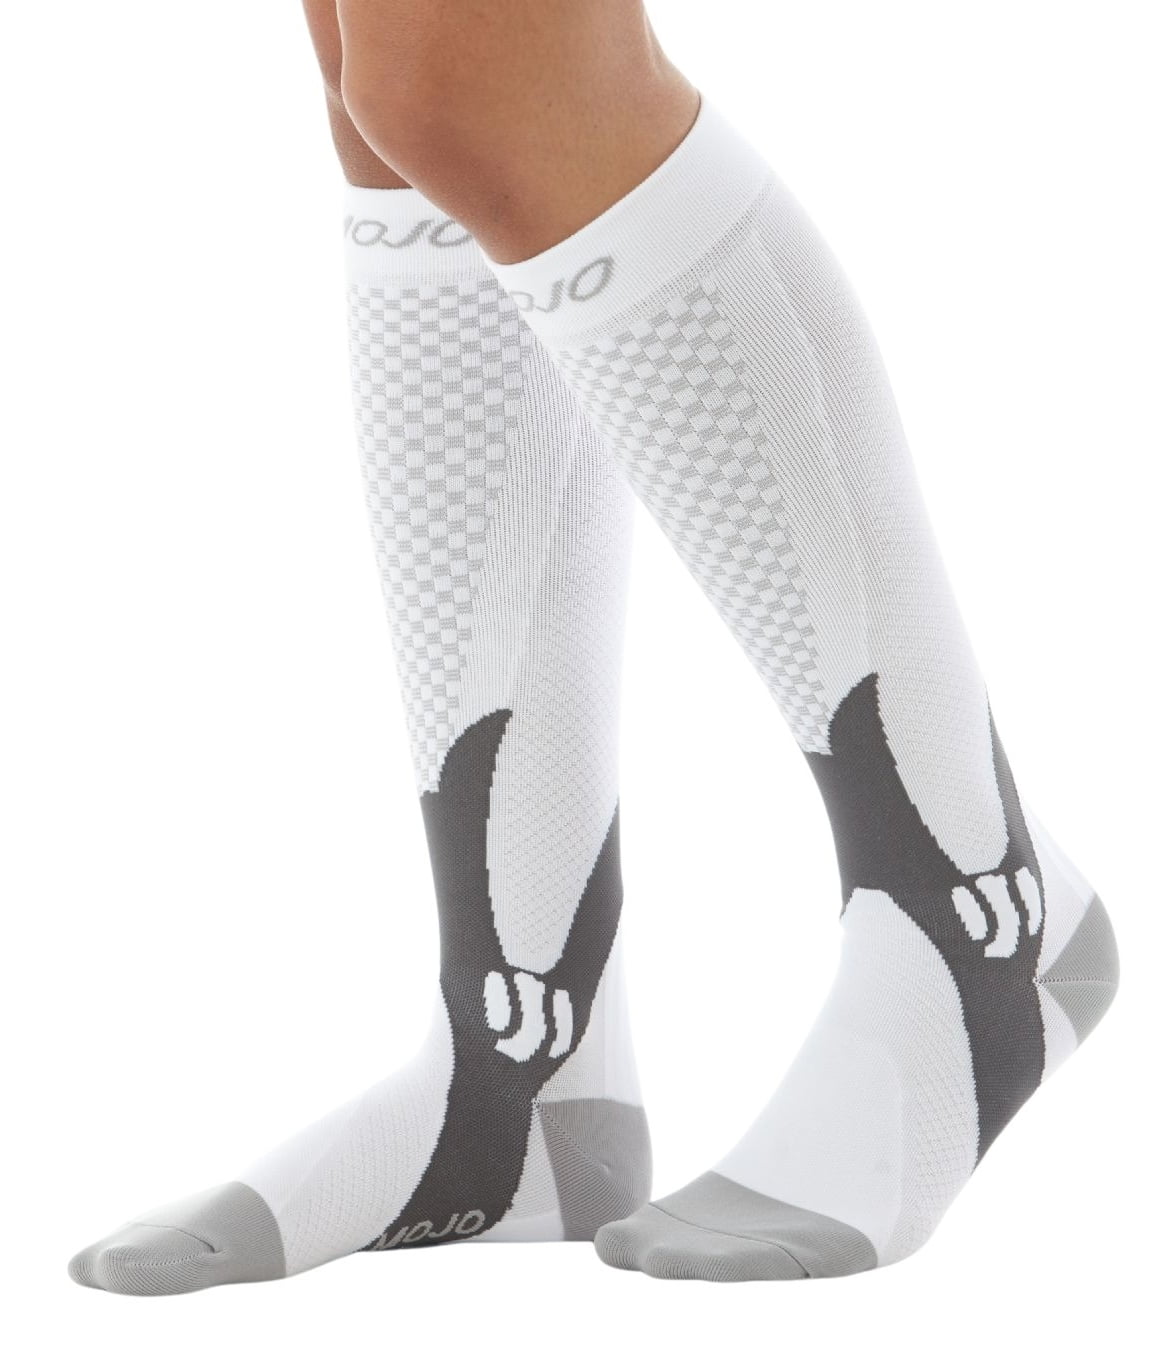 New Medical Women's 10-14 mmHG Compression Socks-16 New NURSE Designs/Comfort 